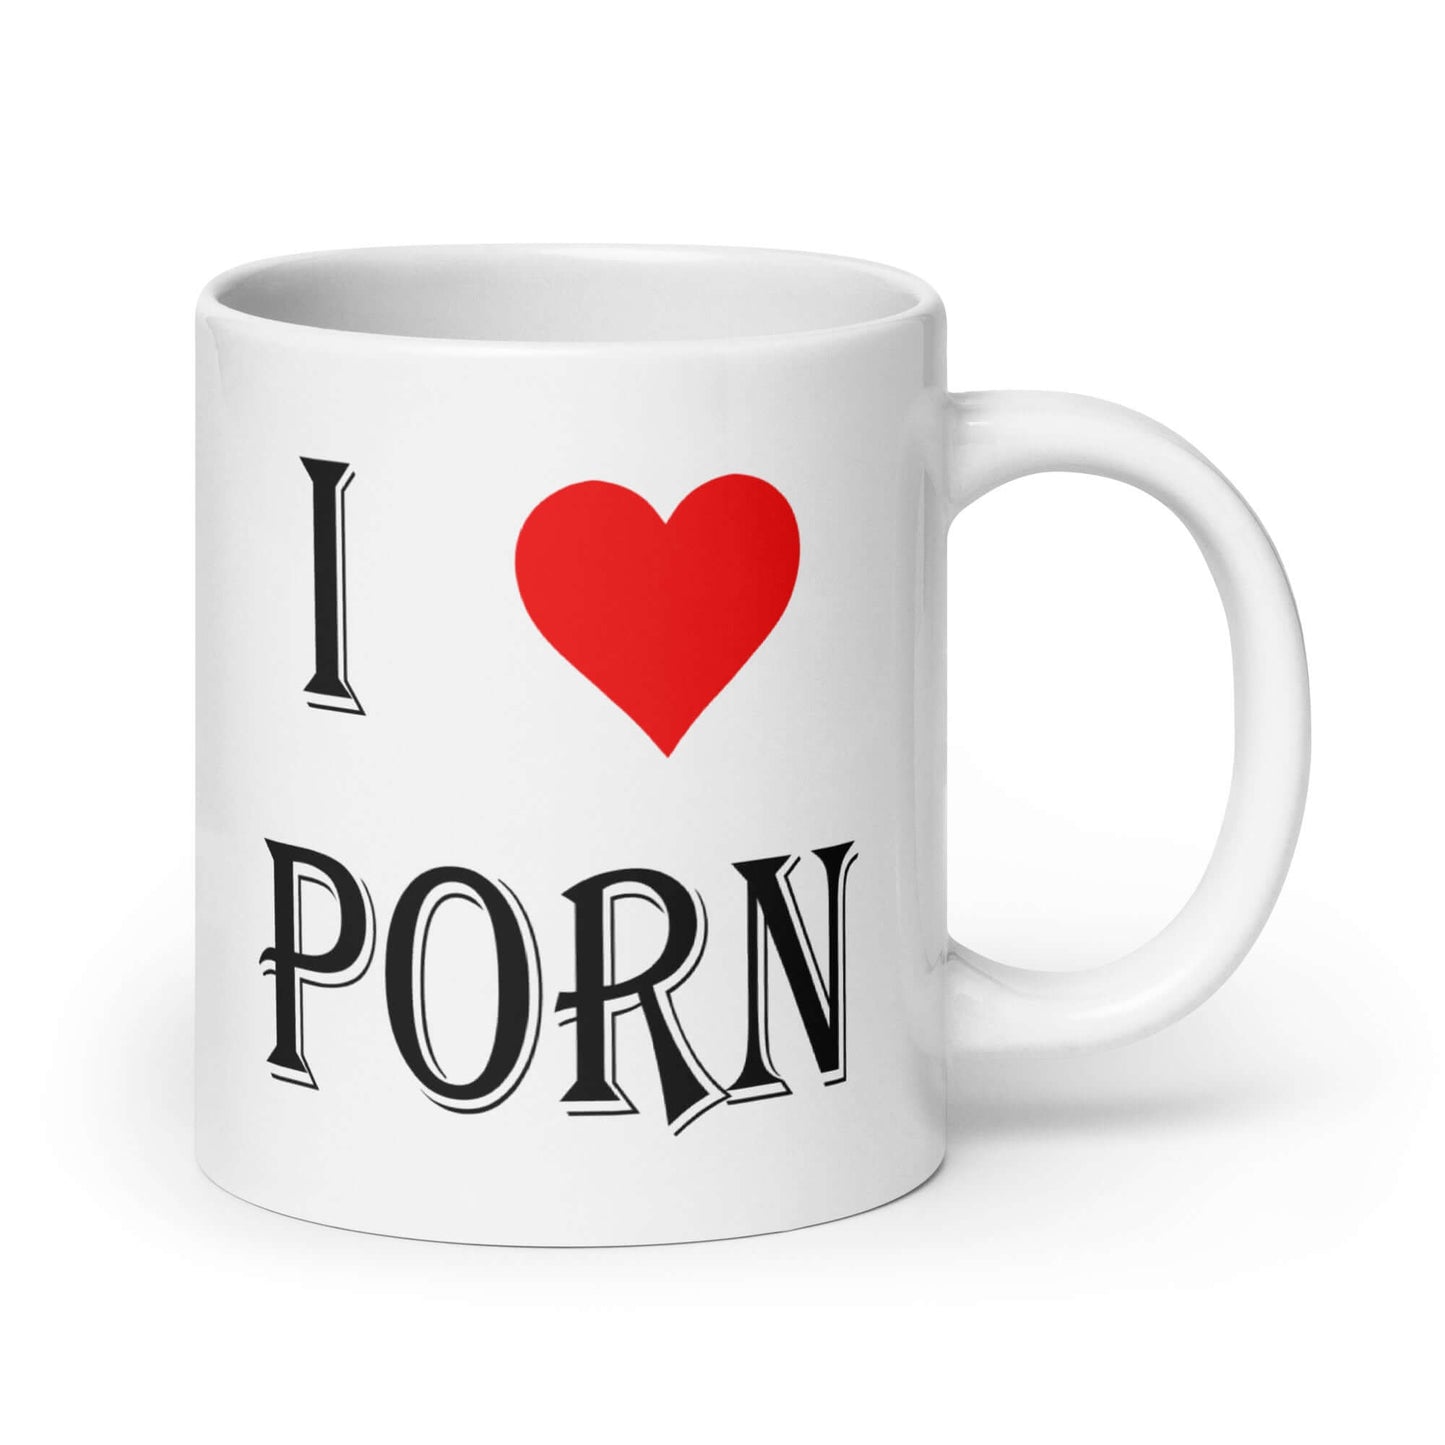 I love porn funny pornography joke sexual humor mug